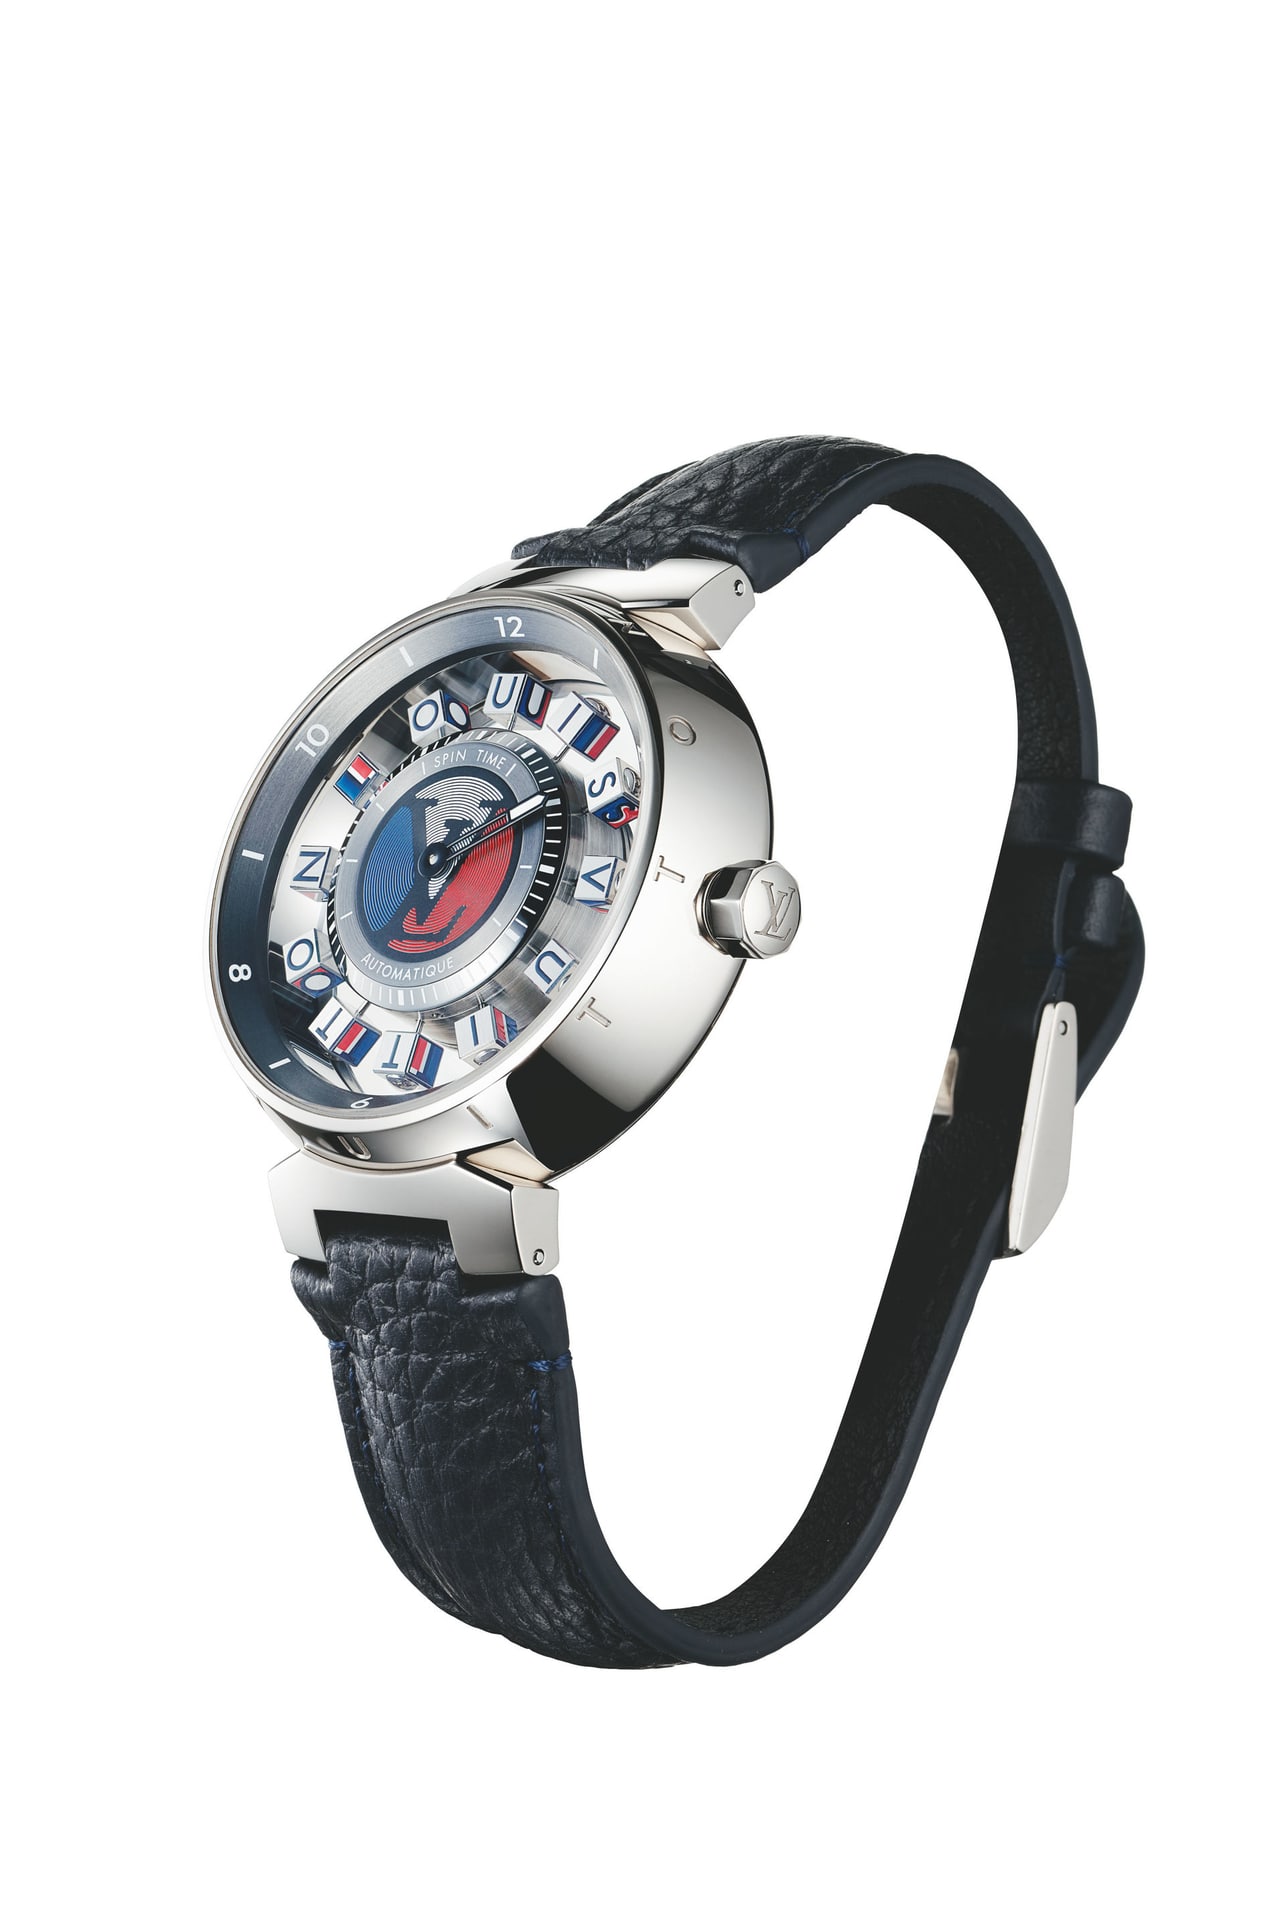 Louis Vuitton Tambour Spin Time Air watch: It's transformed timekeeping, British GQ